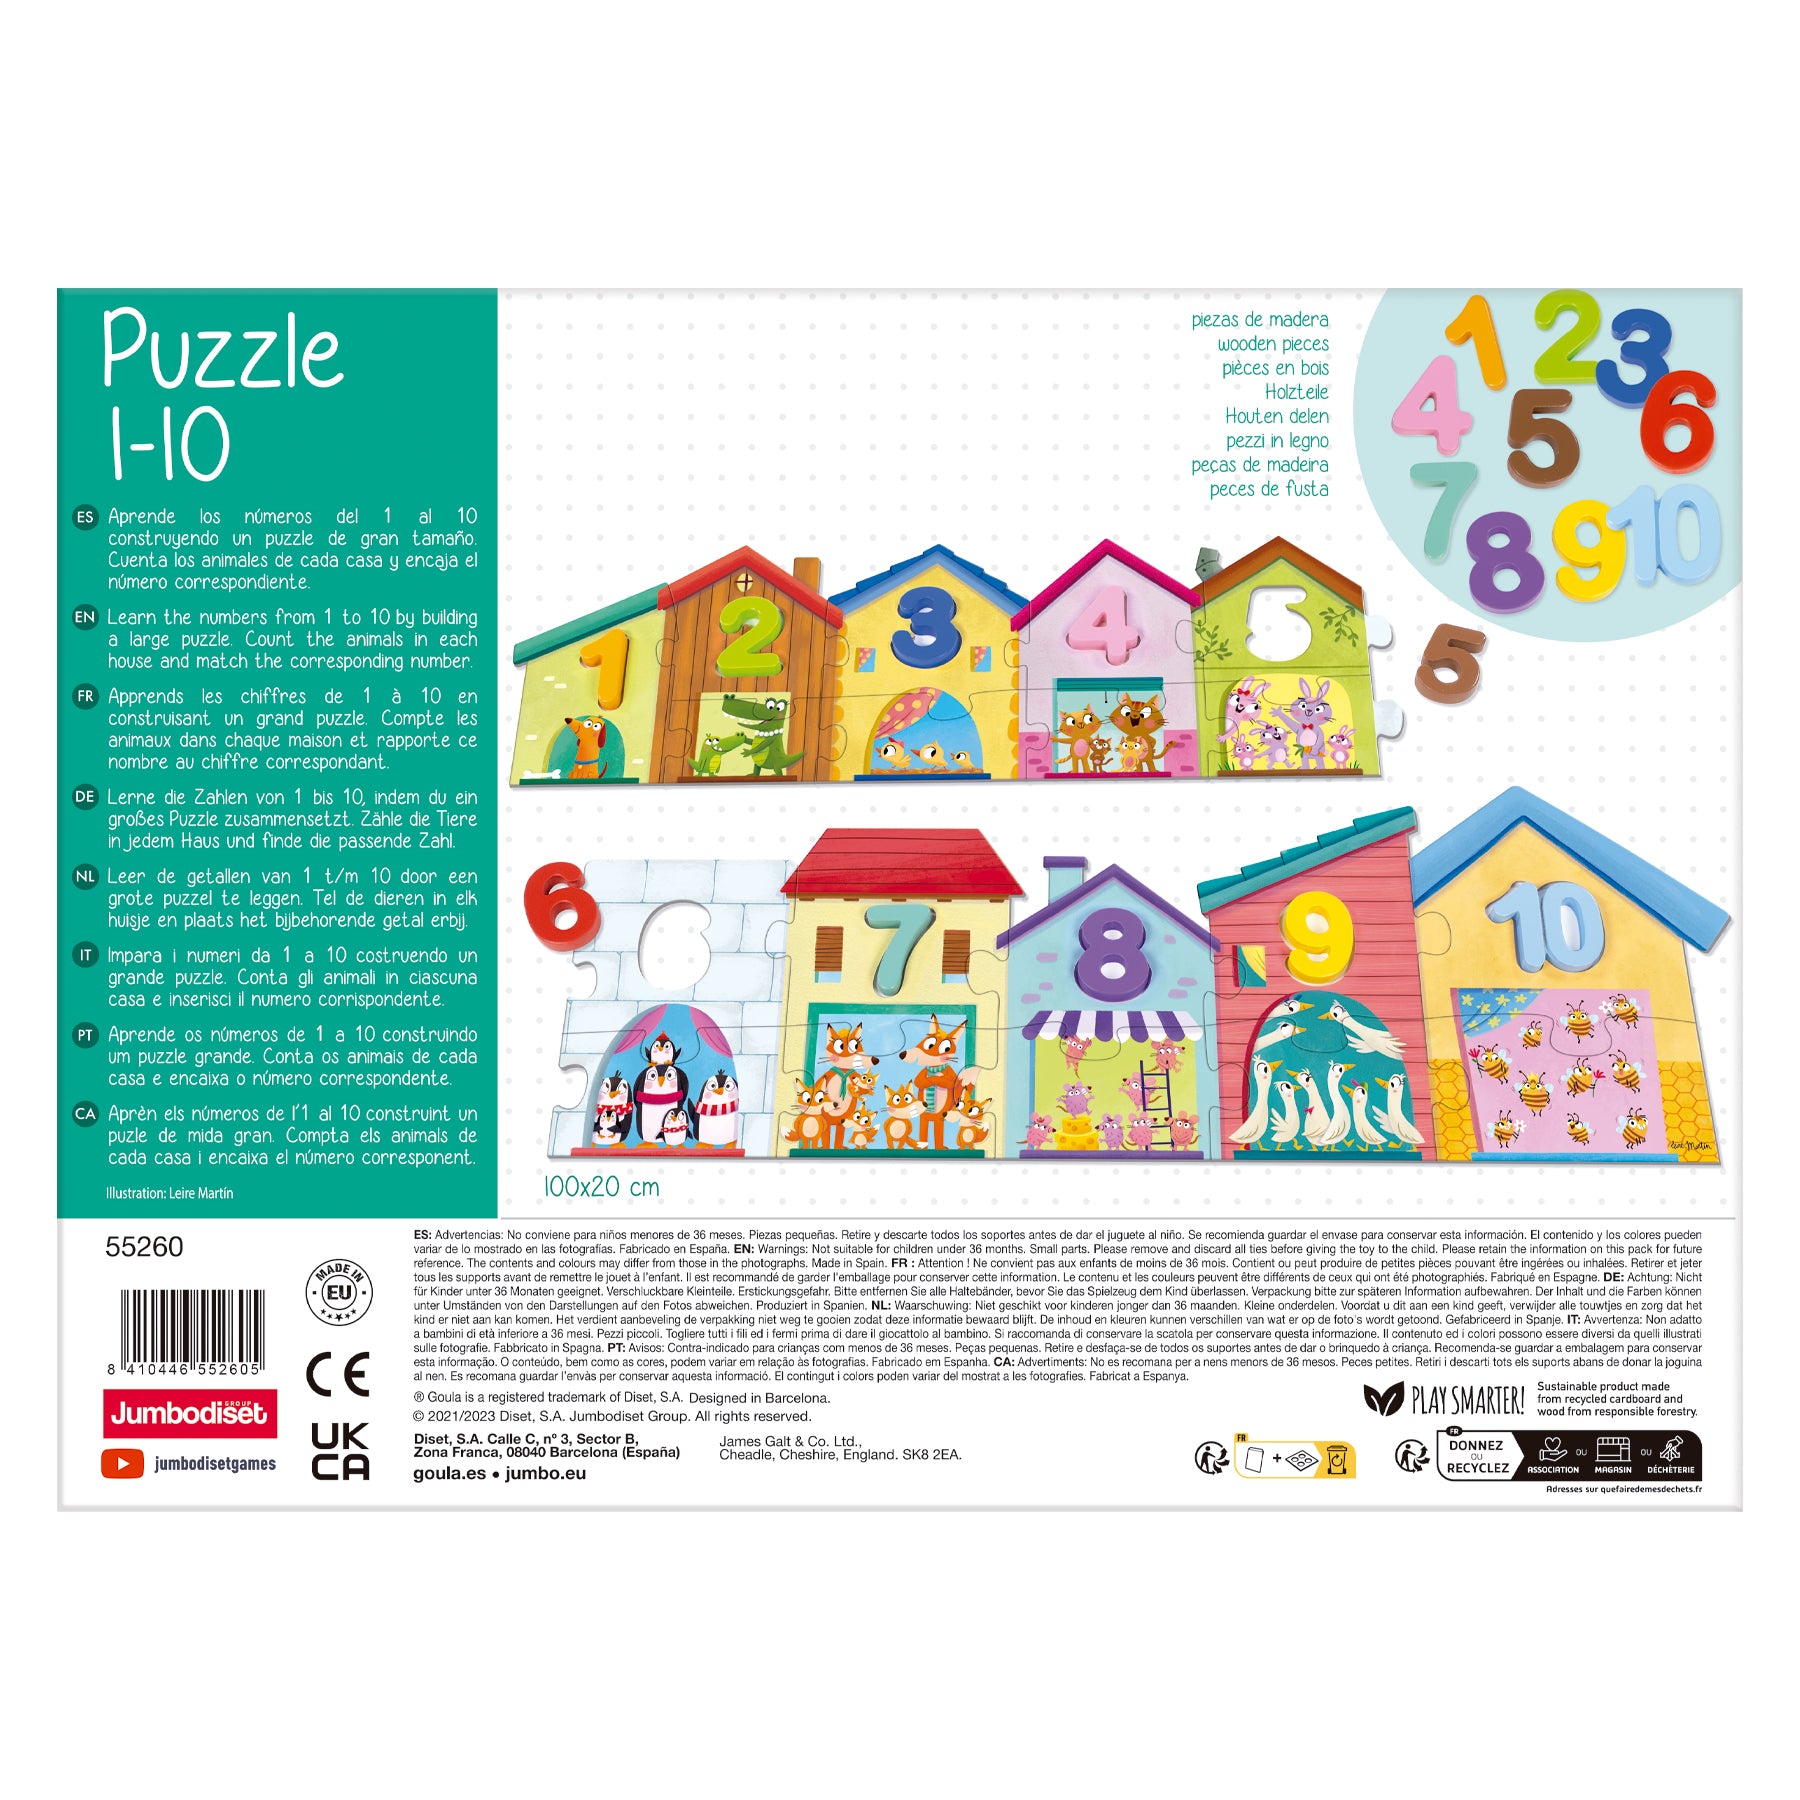 Puzzle 1-10 - product image - Jumboplay.com